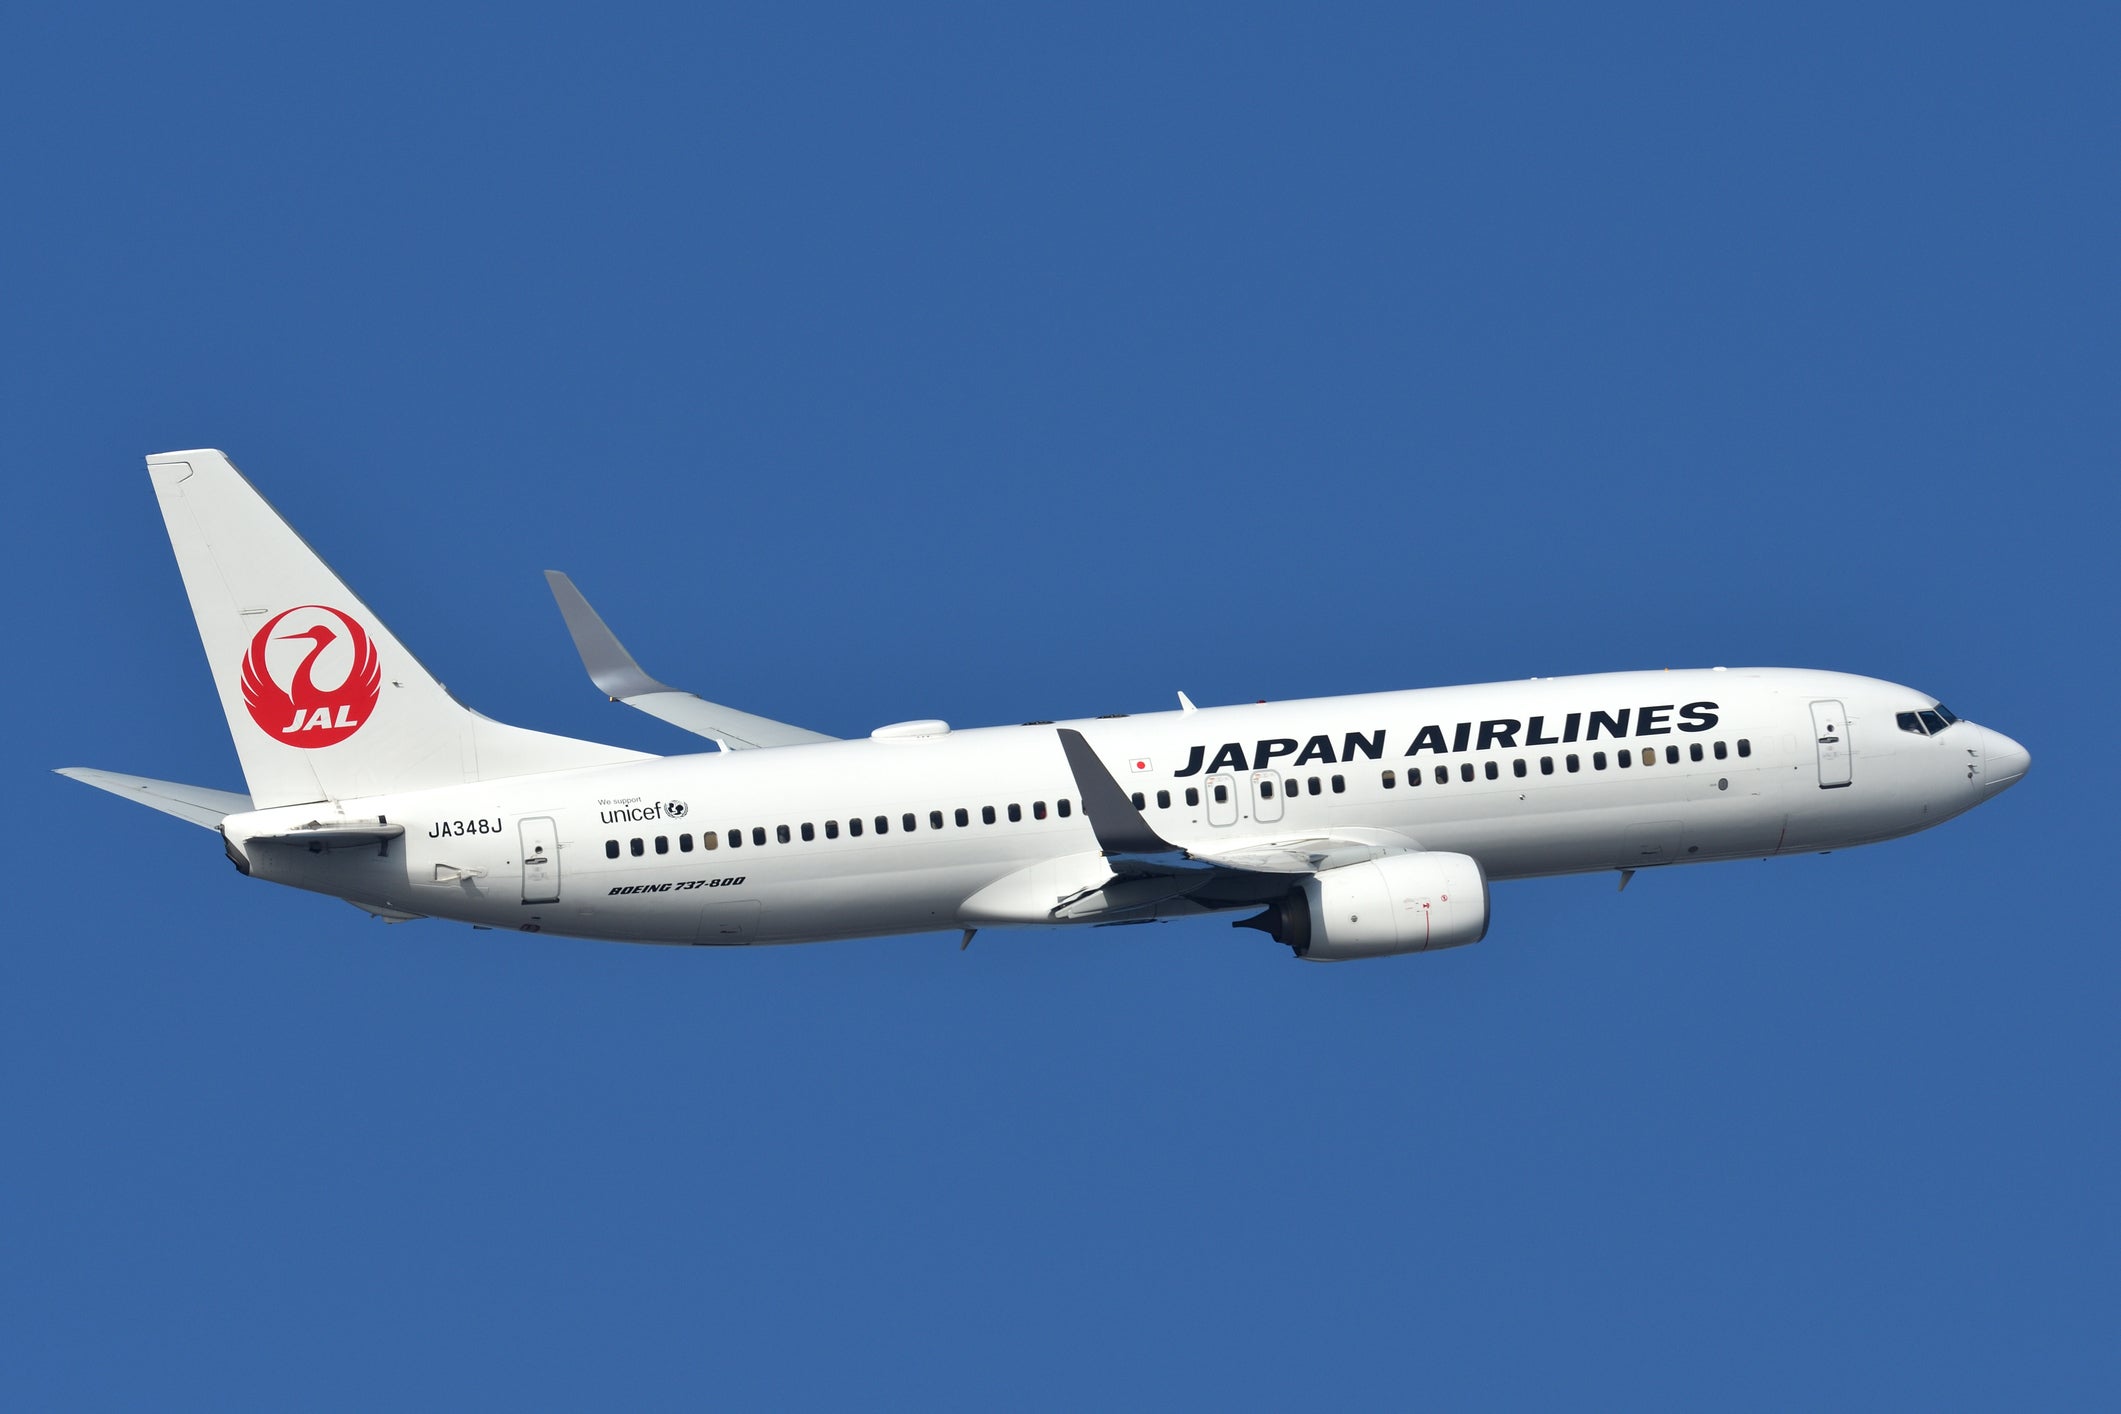 A Japan Airlines passenger plane